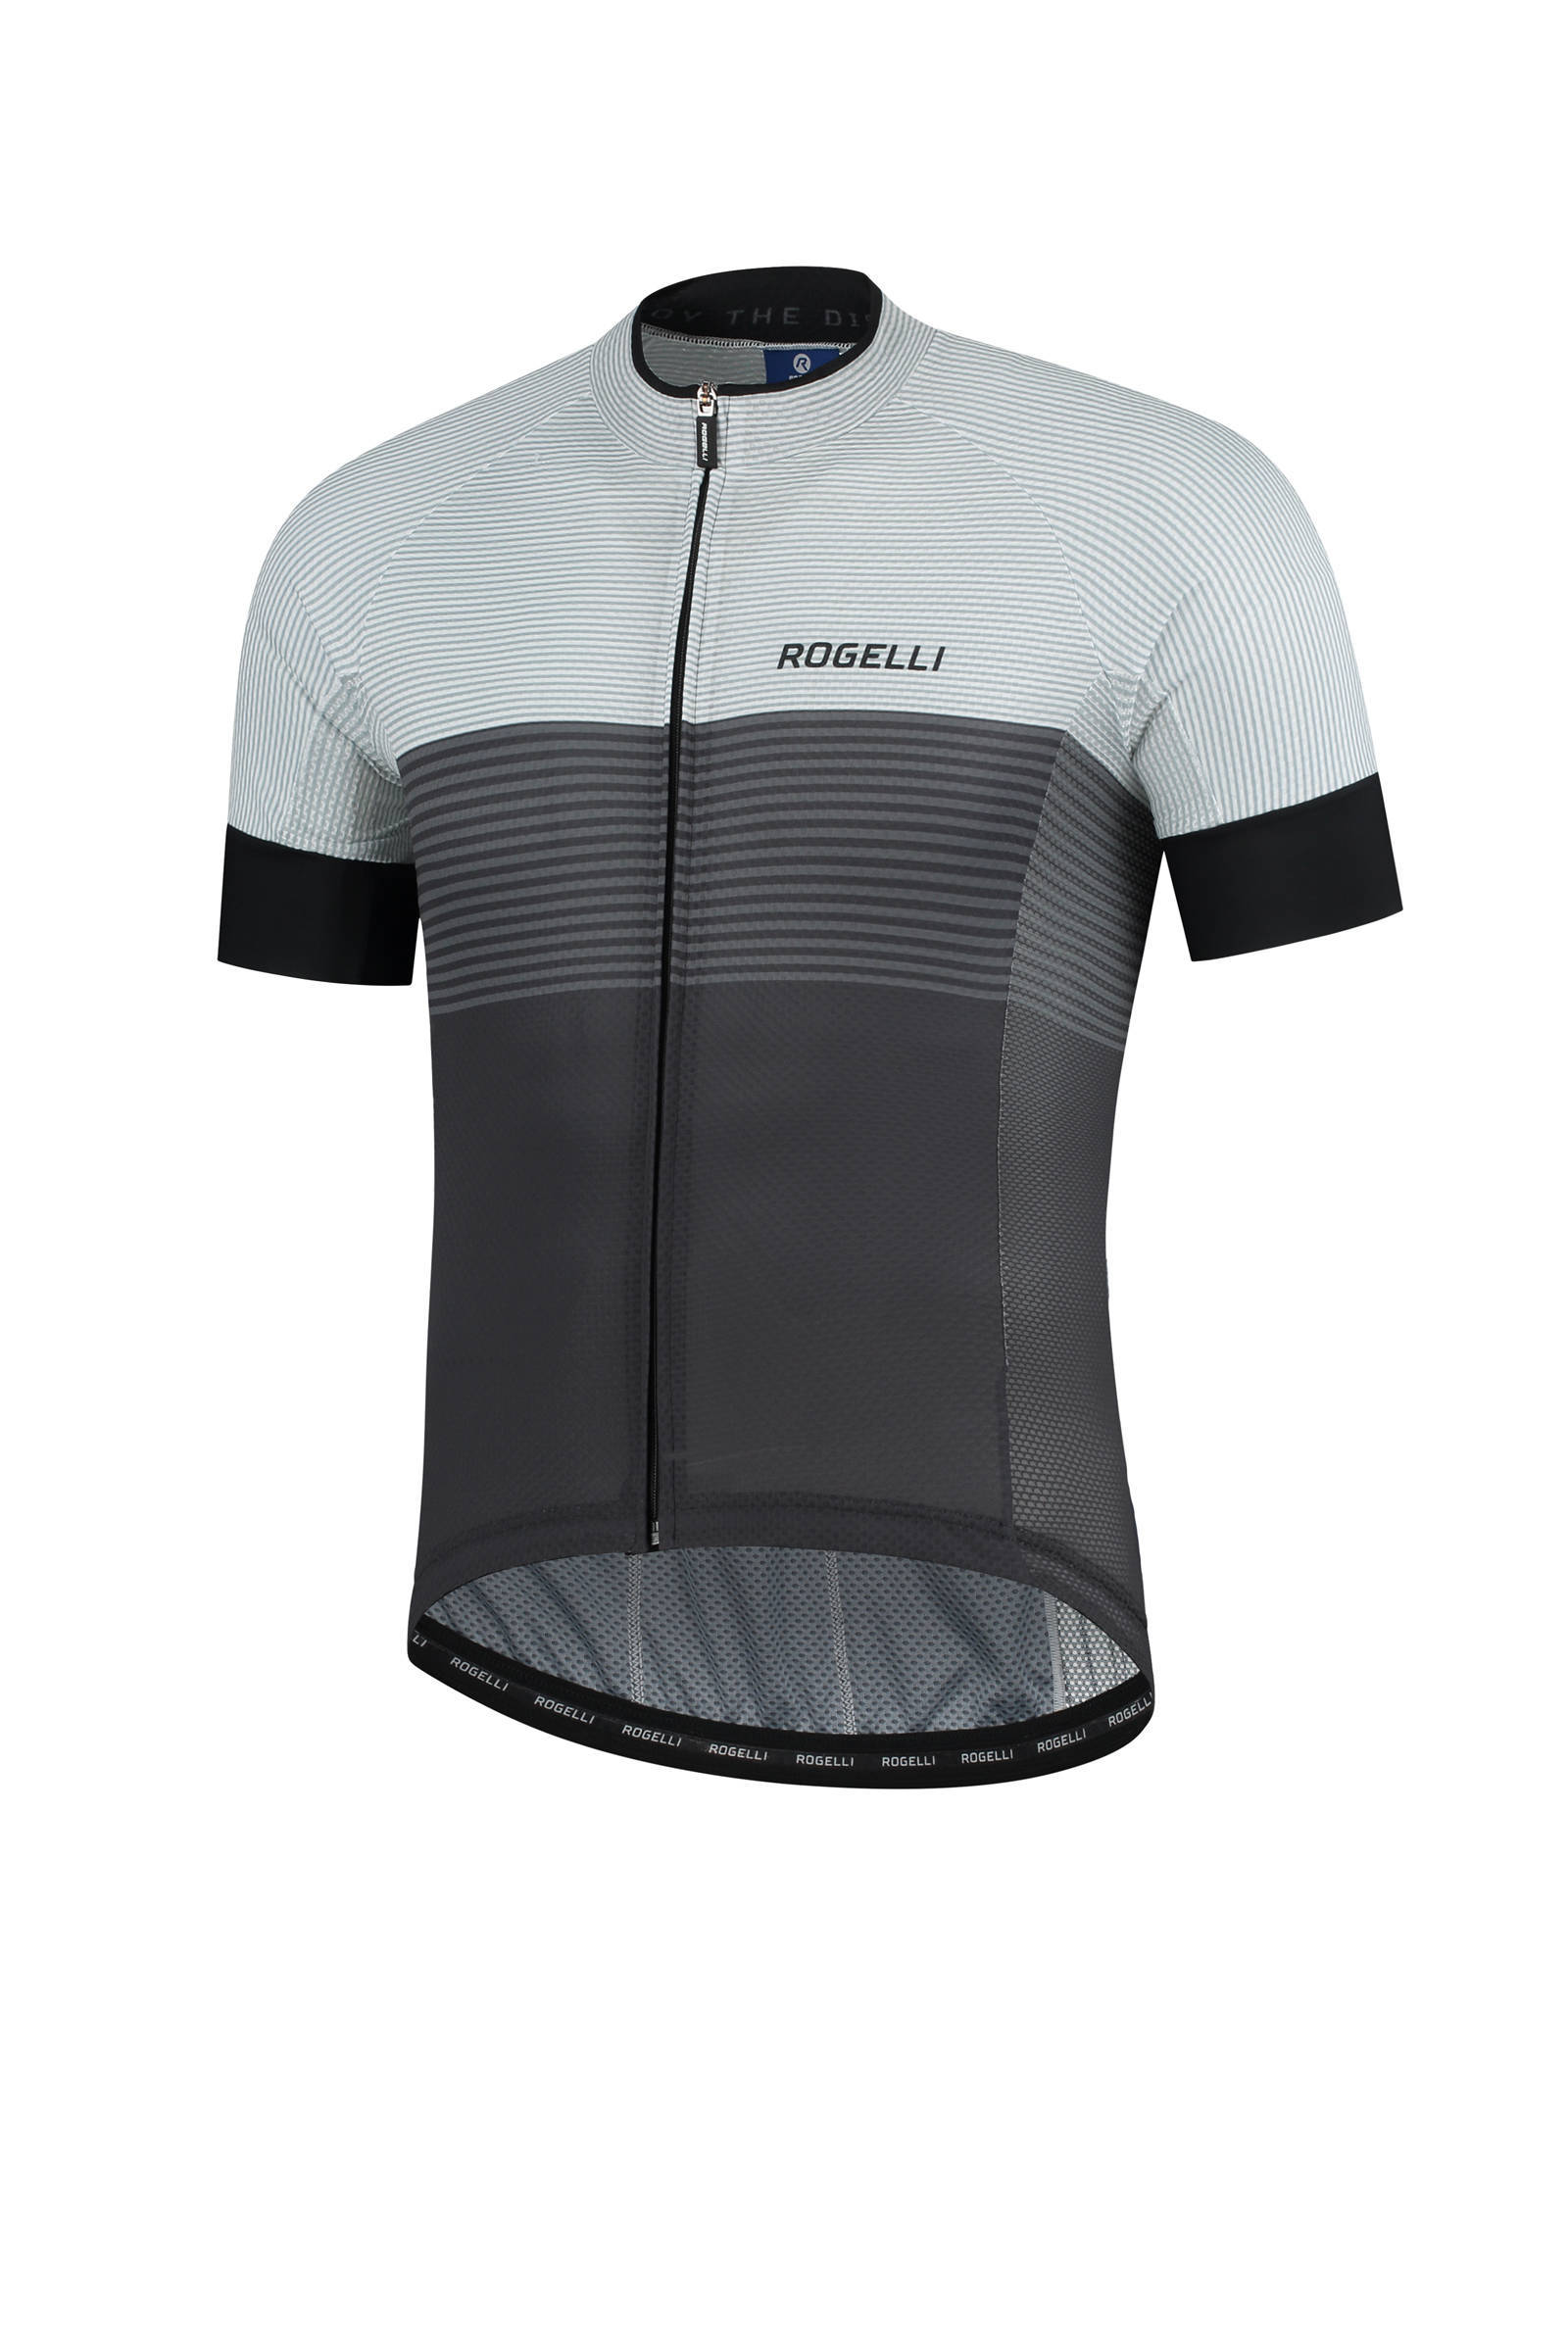 Rogelli fietsshirt Boost zwart/donkergrijs/wit online kopen